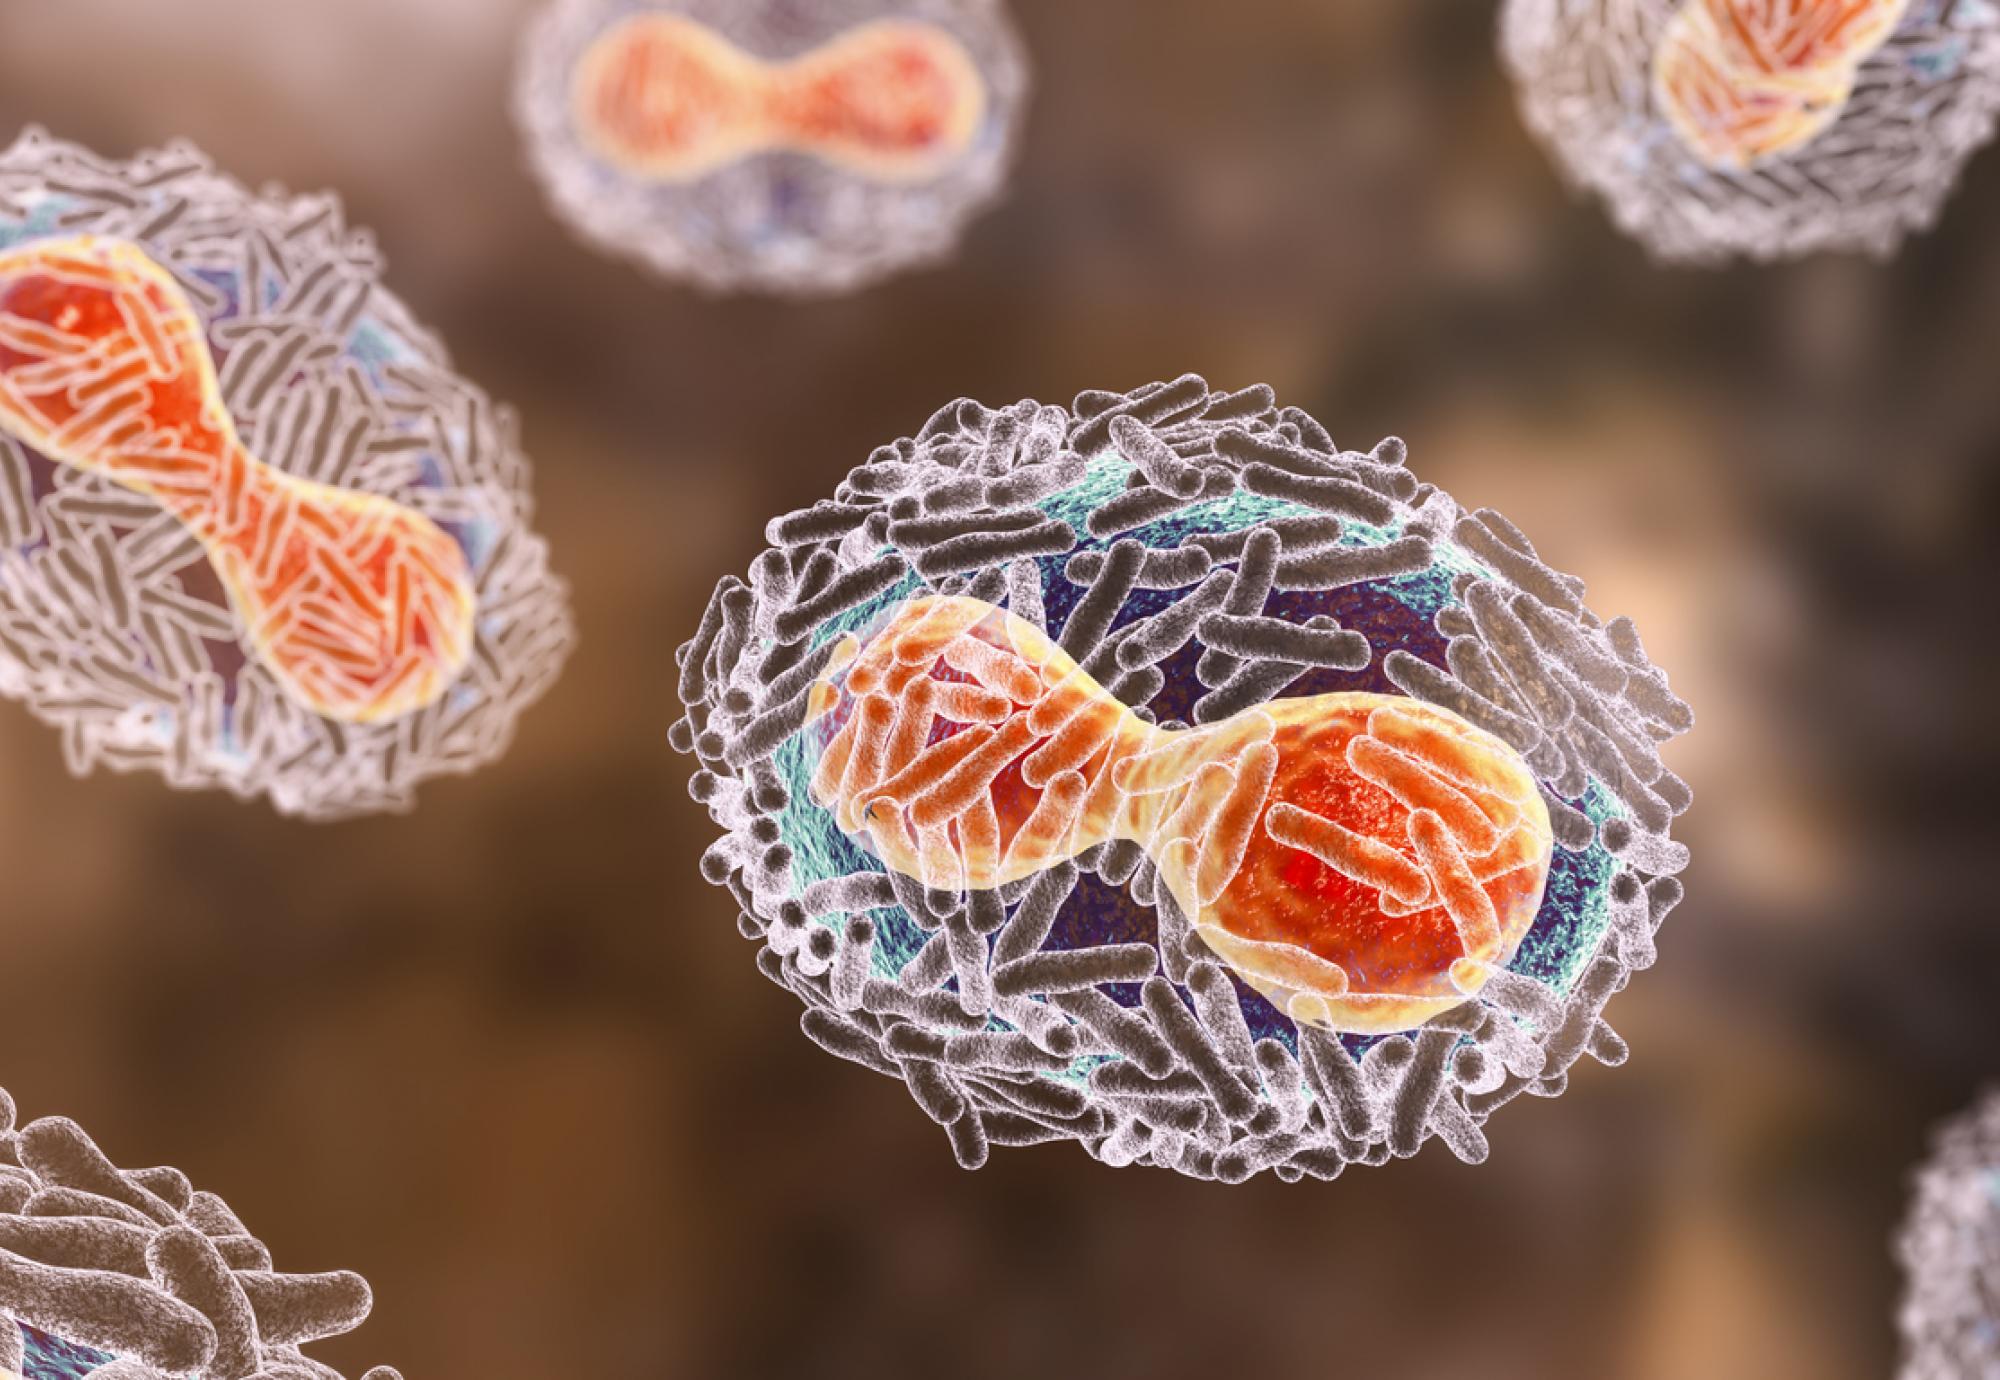 3D illustration of the monkeypox virus